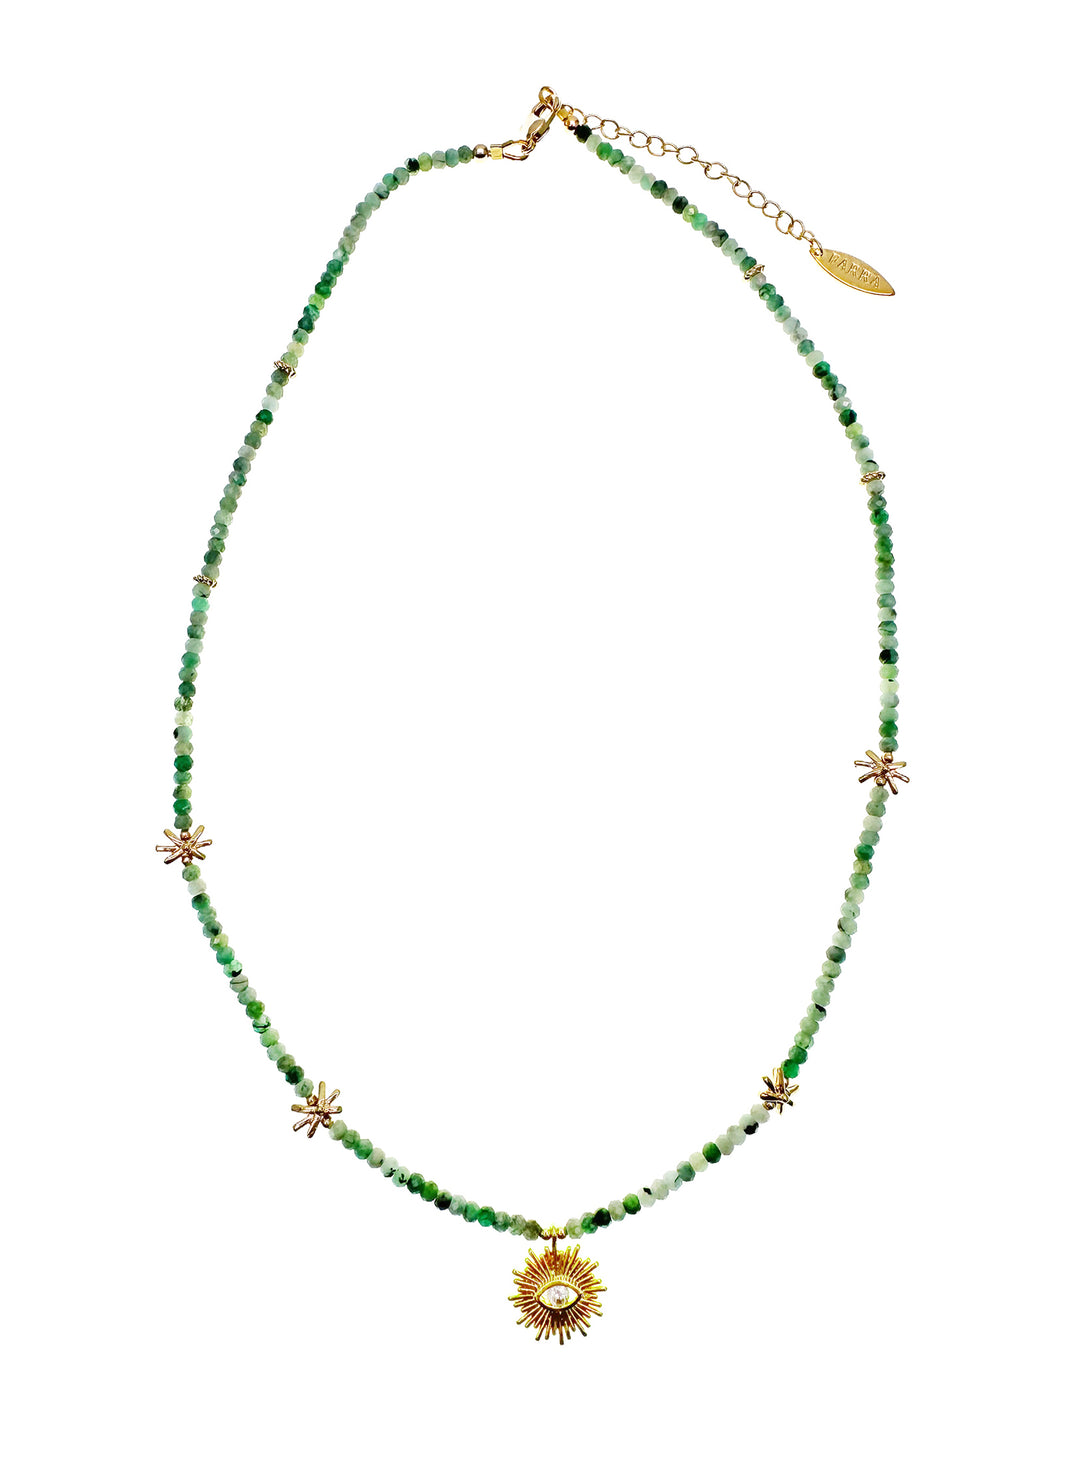 Emerald with Evil Eye Pendant Necklace LN049 - FARRA